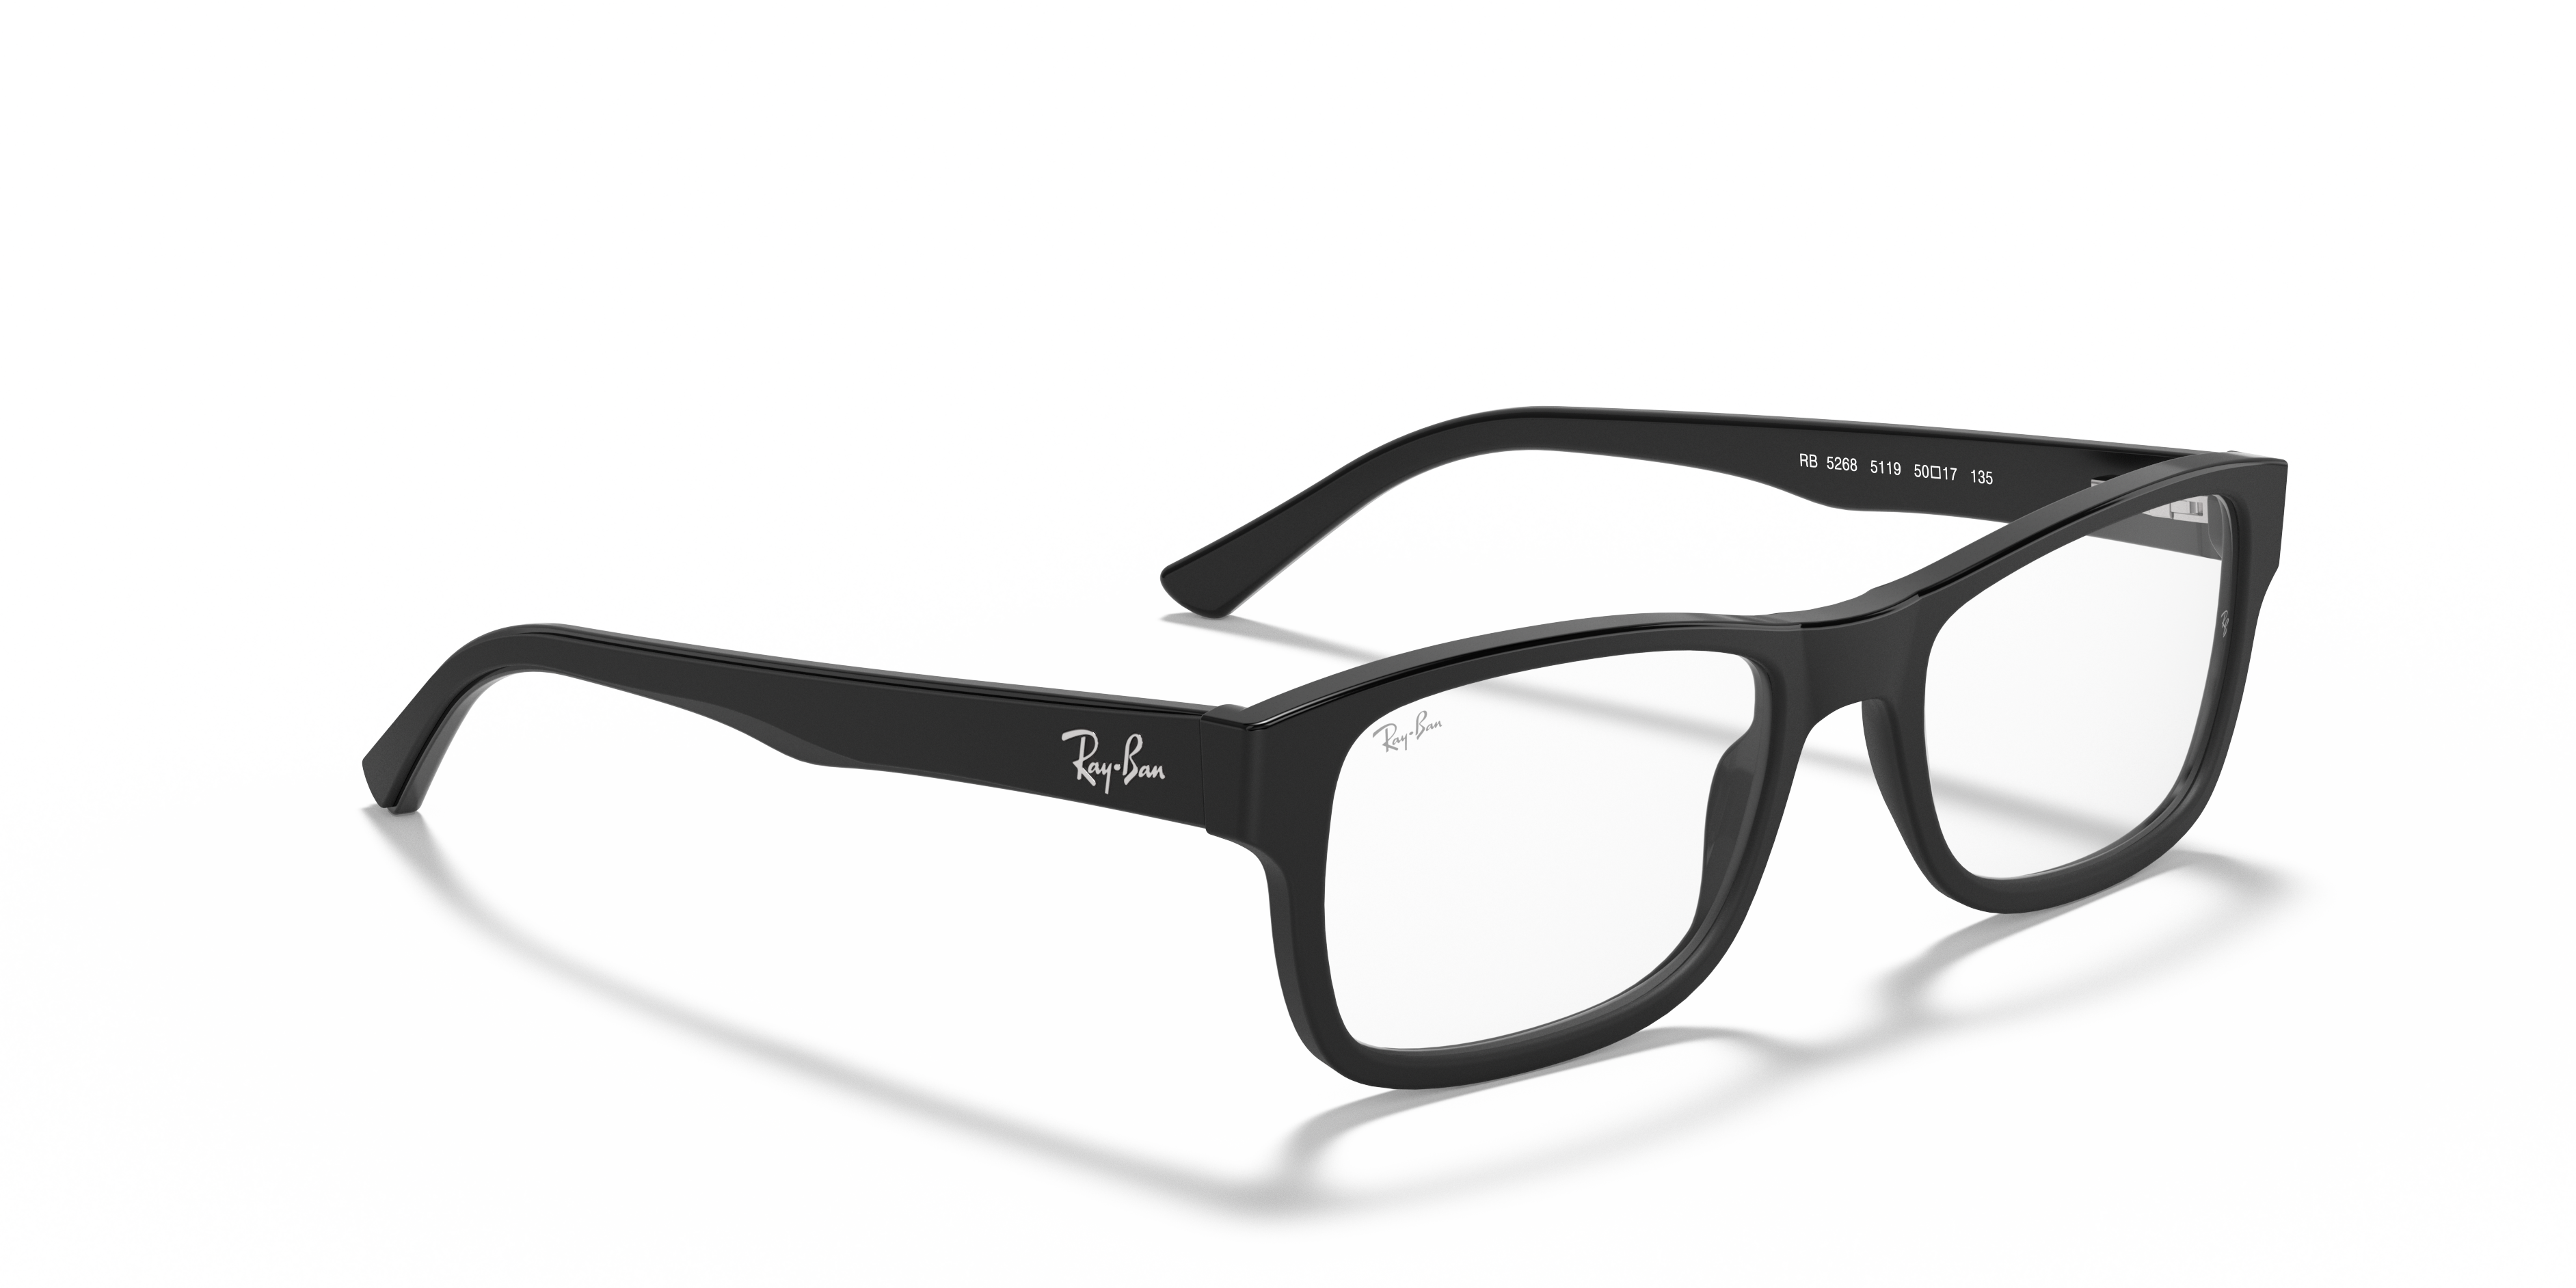 Rb5268 Eyeglasses with Black Frame | Ray-Ban®